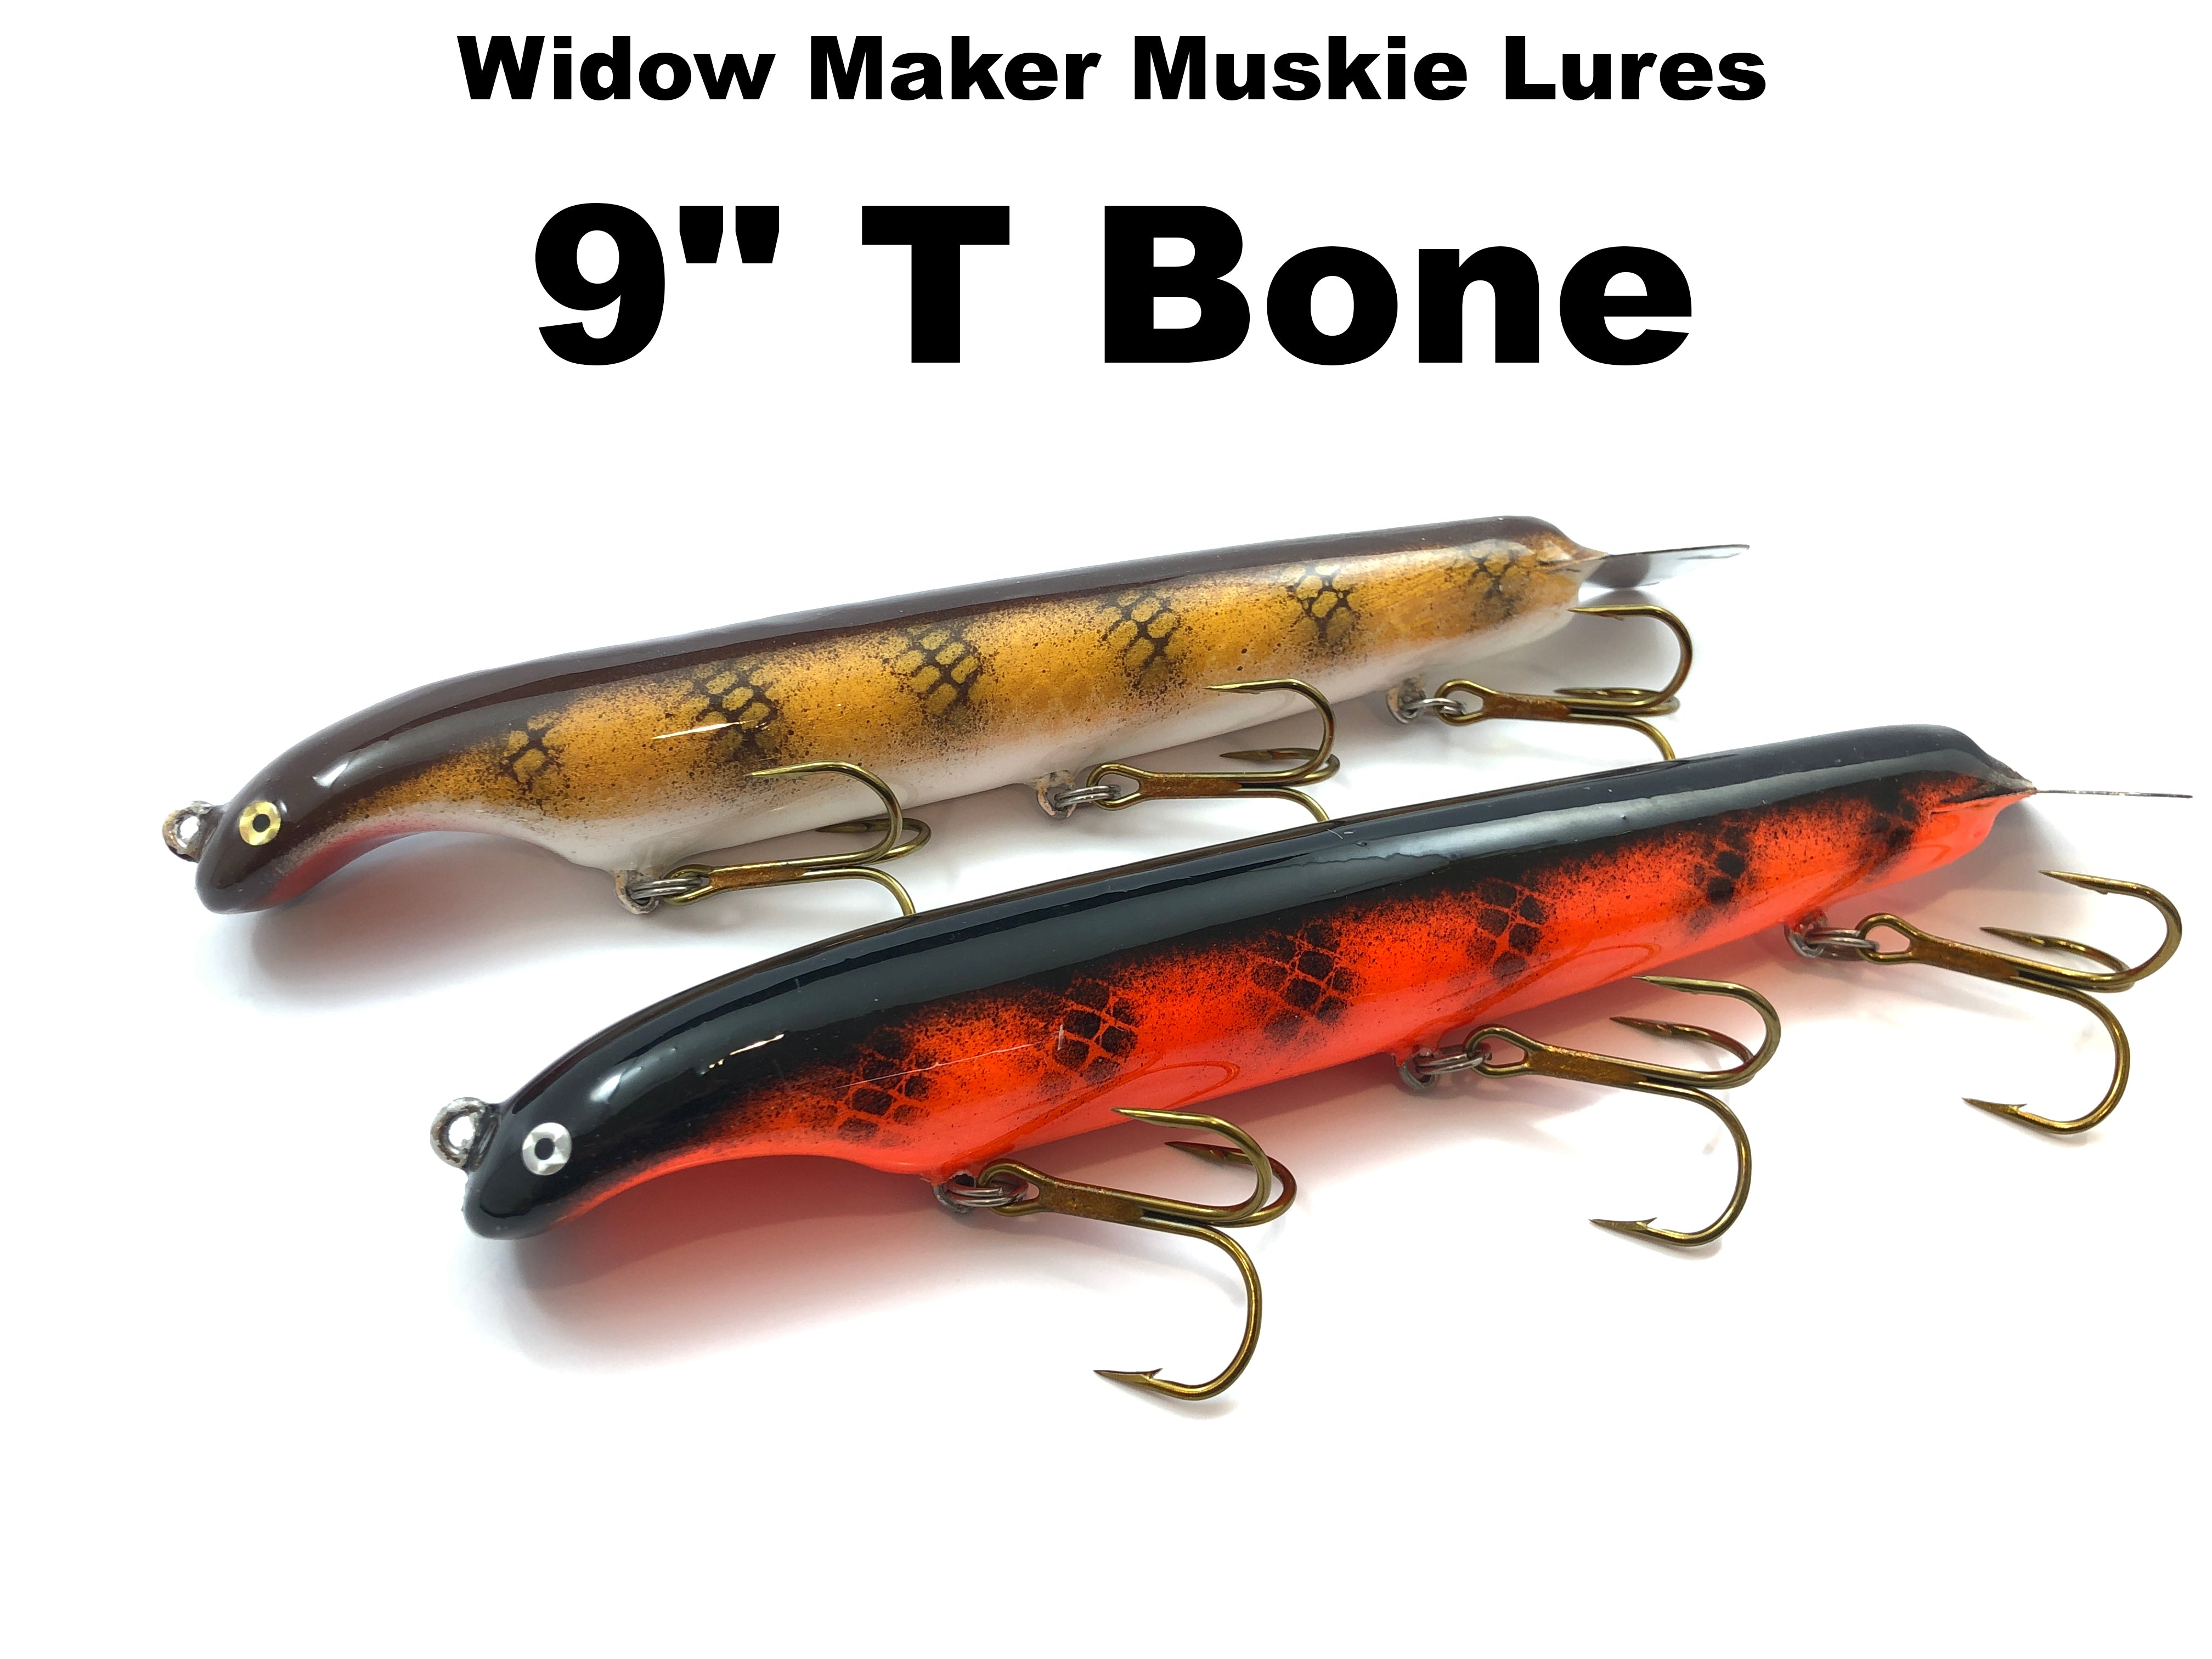 Widow Maker Muskie Lures - 9 T Bone